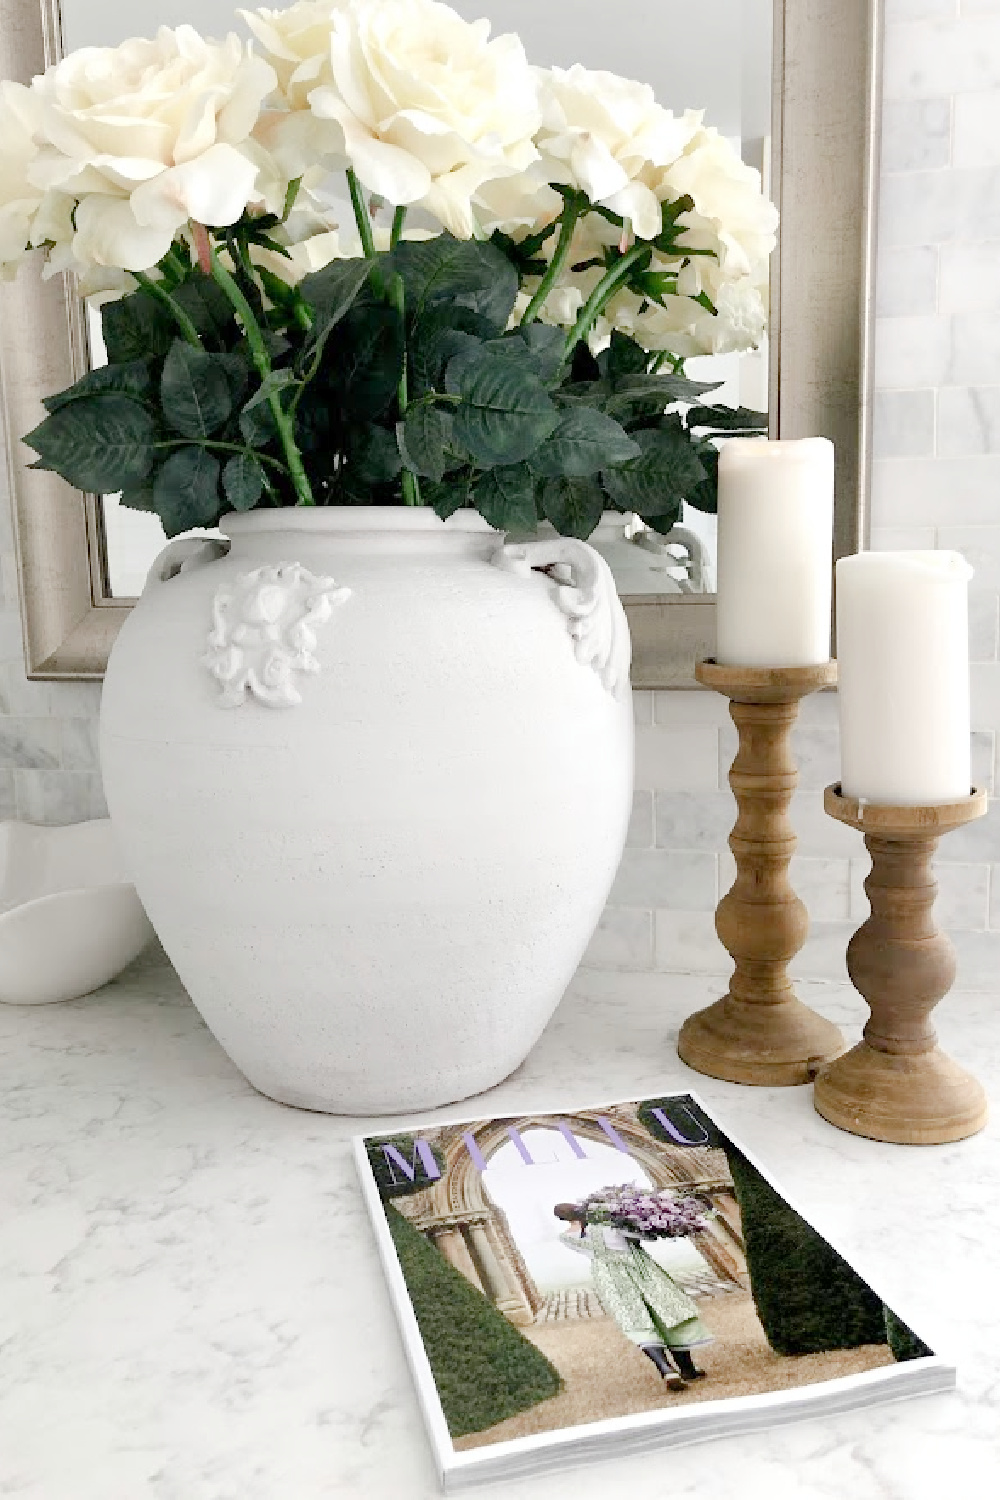 Milieu magazine (Spring 2021) on my kitchen counter (Viatera Minuet white quartz) with urn and candle holders - Hello Lovely Studio. #viateraquartz #minuet #milieu #modernfrench